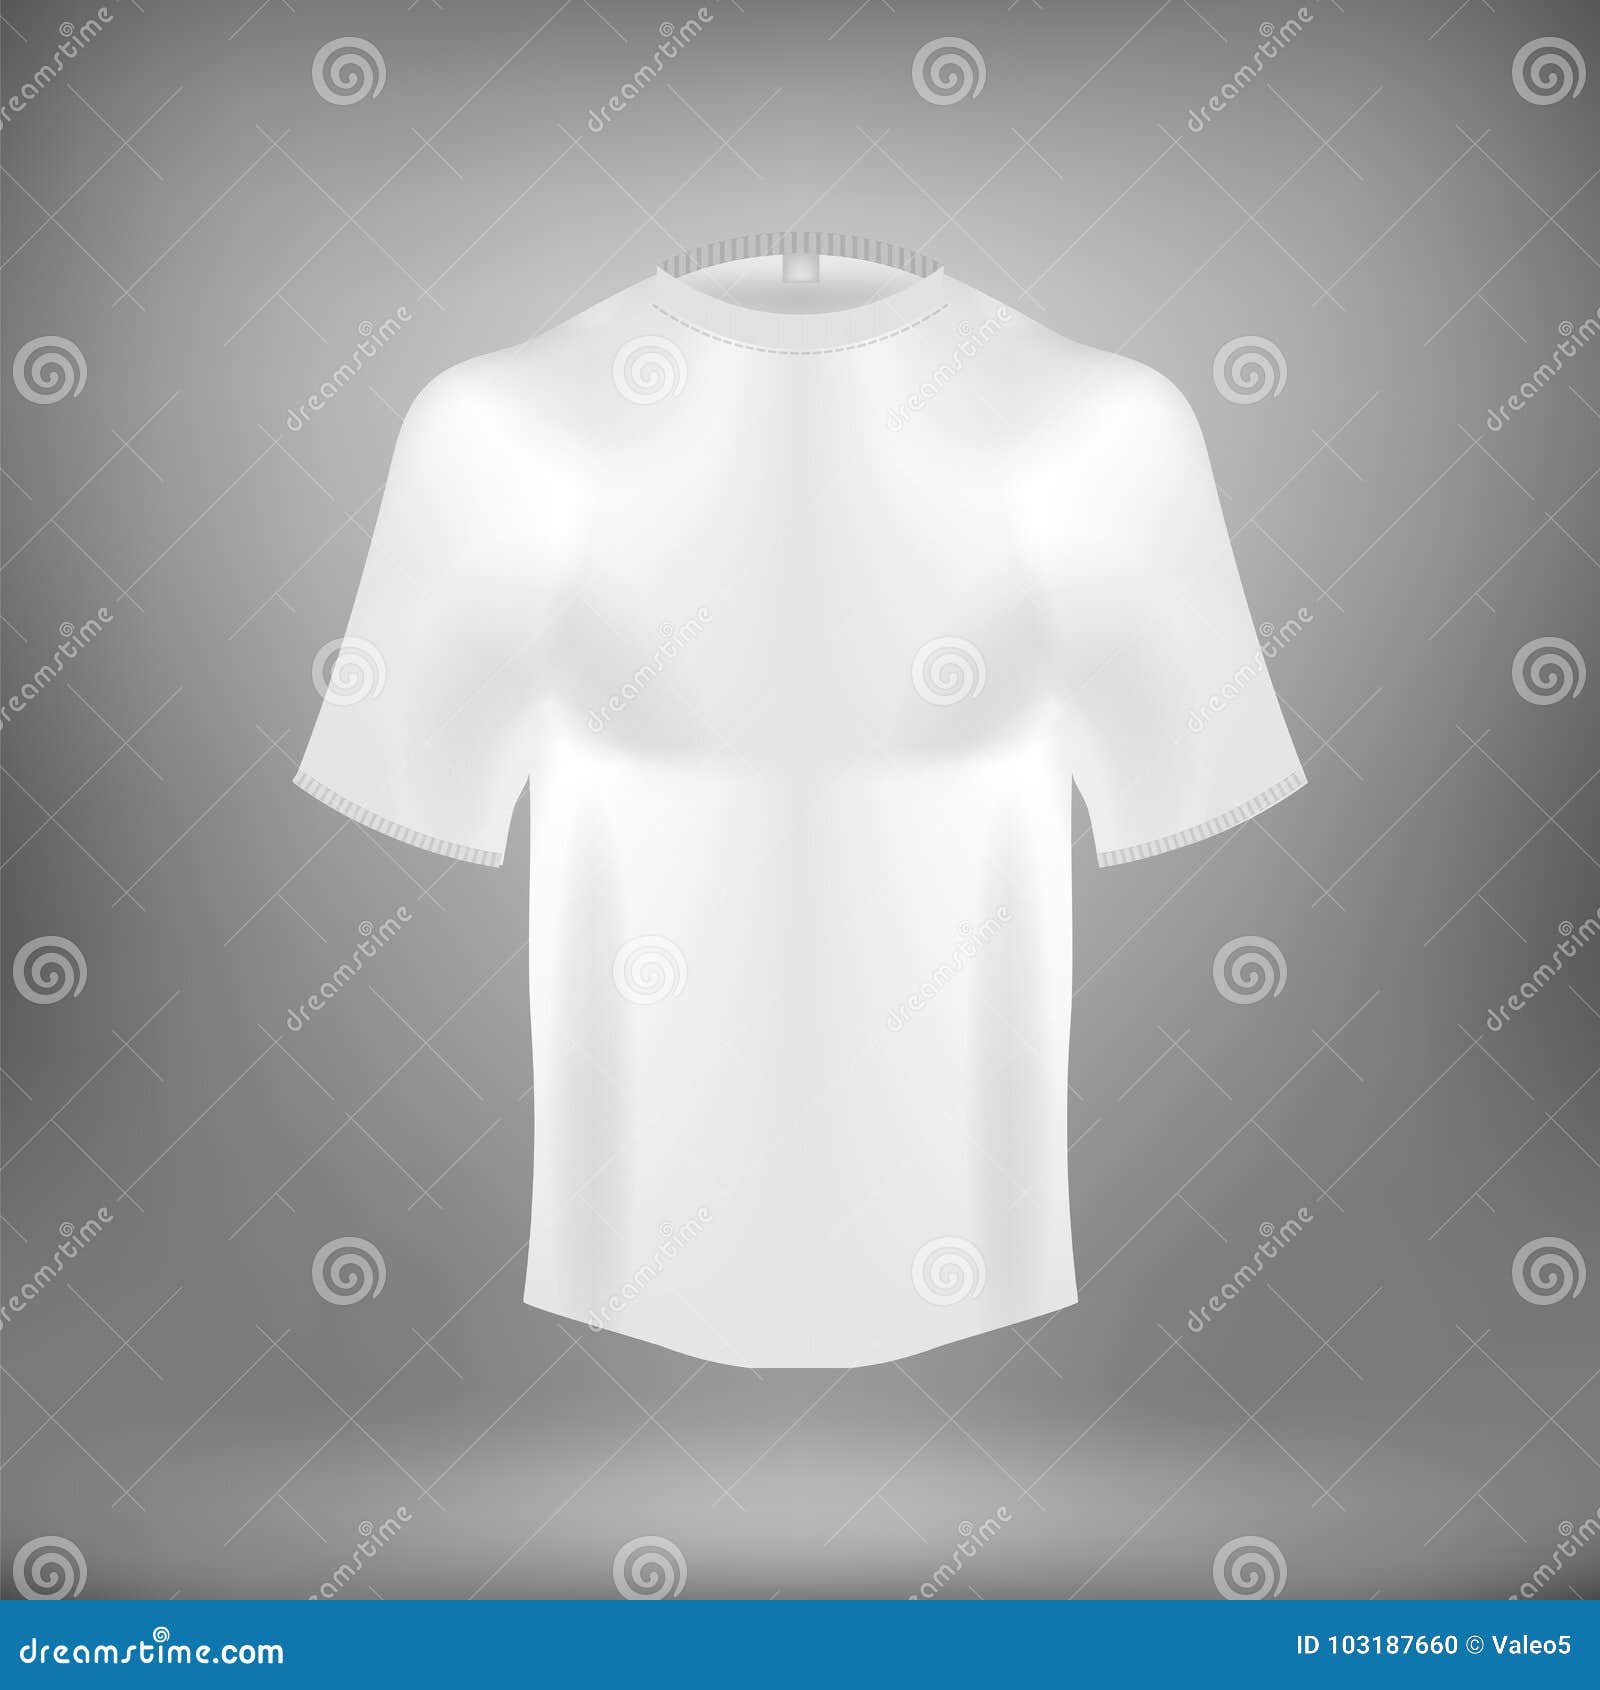 Lege Witte Katoenen T-shirt Stock Illustratie - Illustration of ...